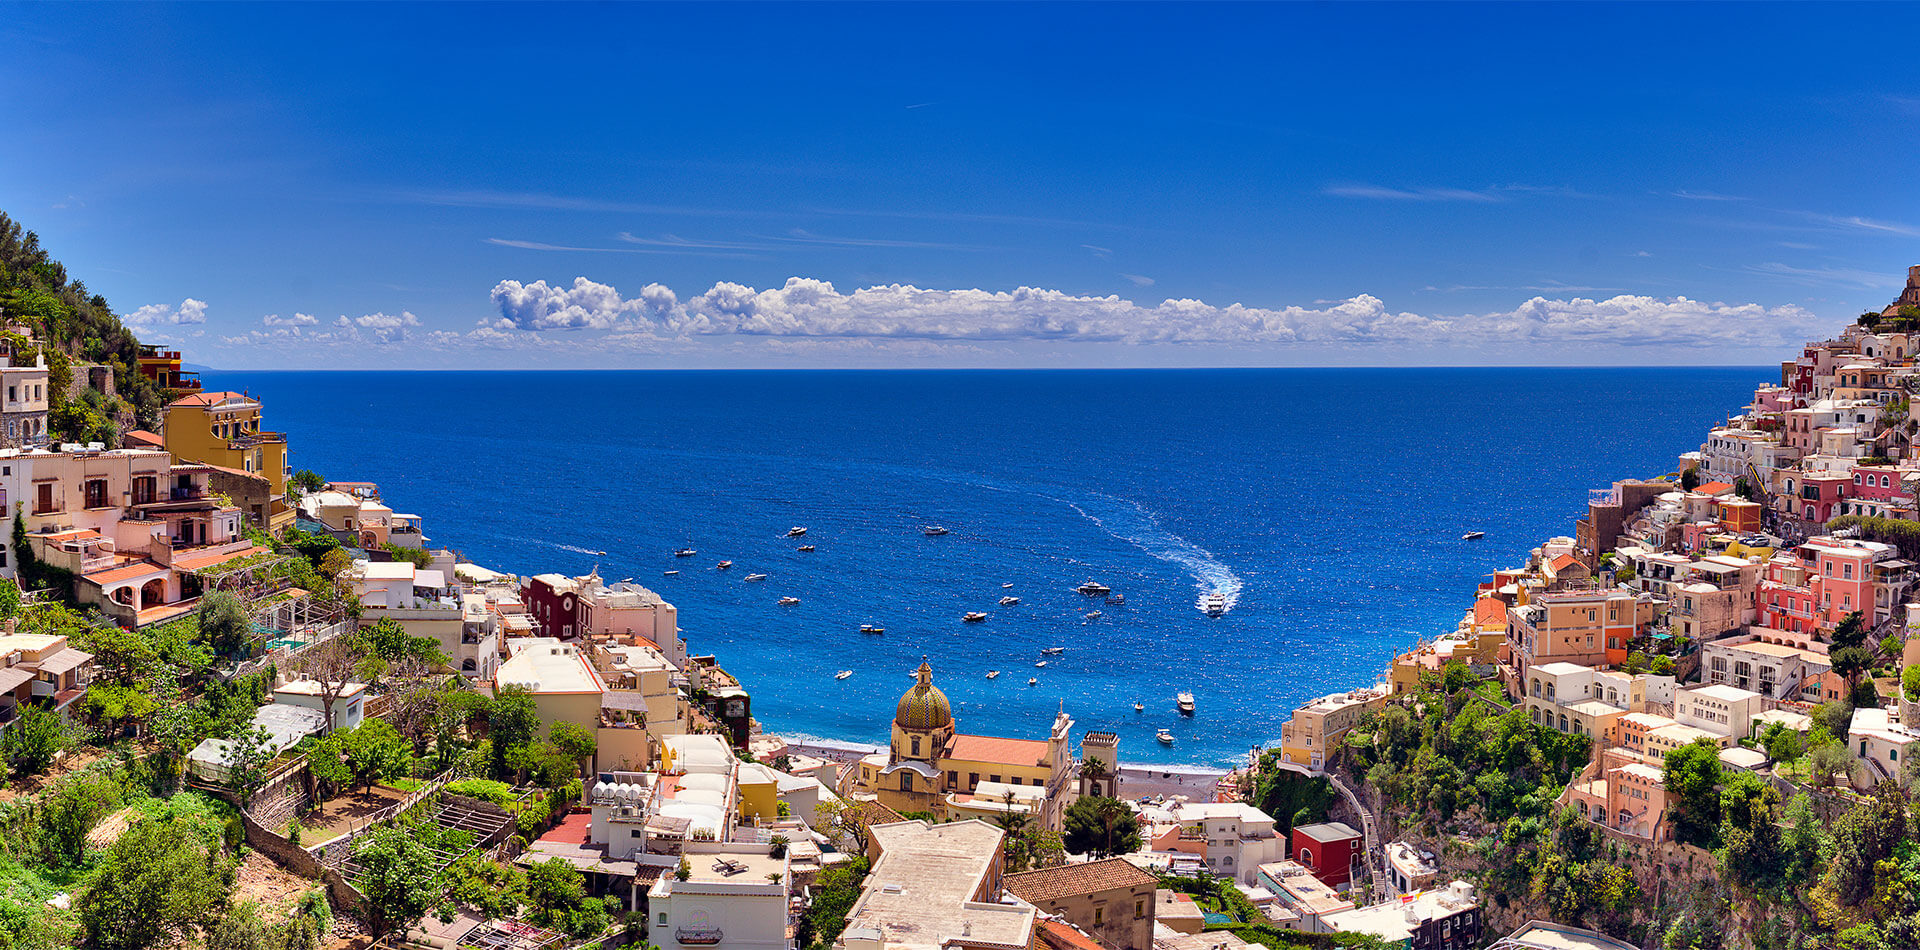 Picturesque Amalfi coast. Positano, Italy